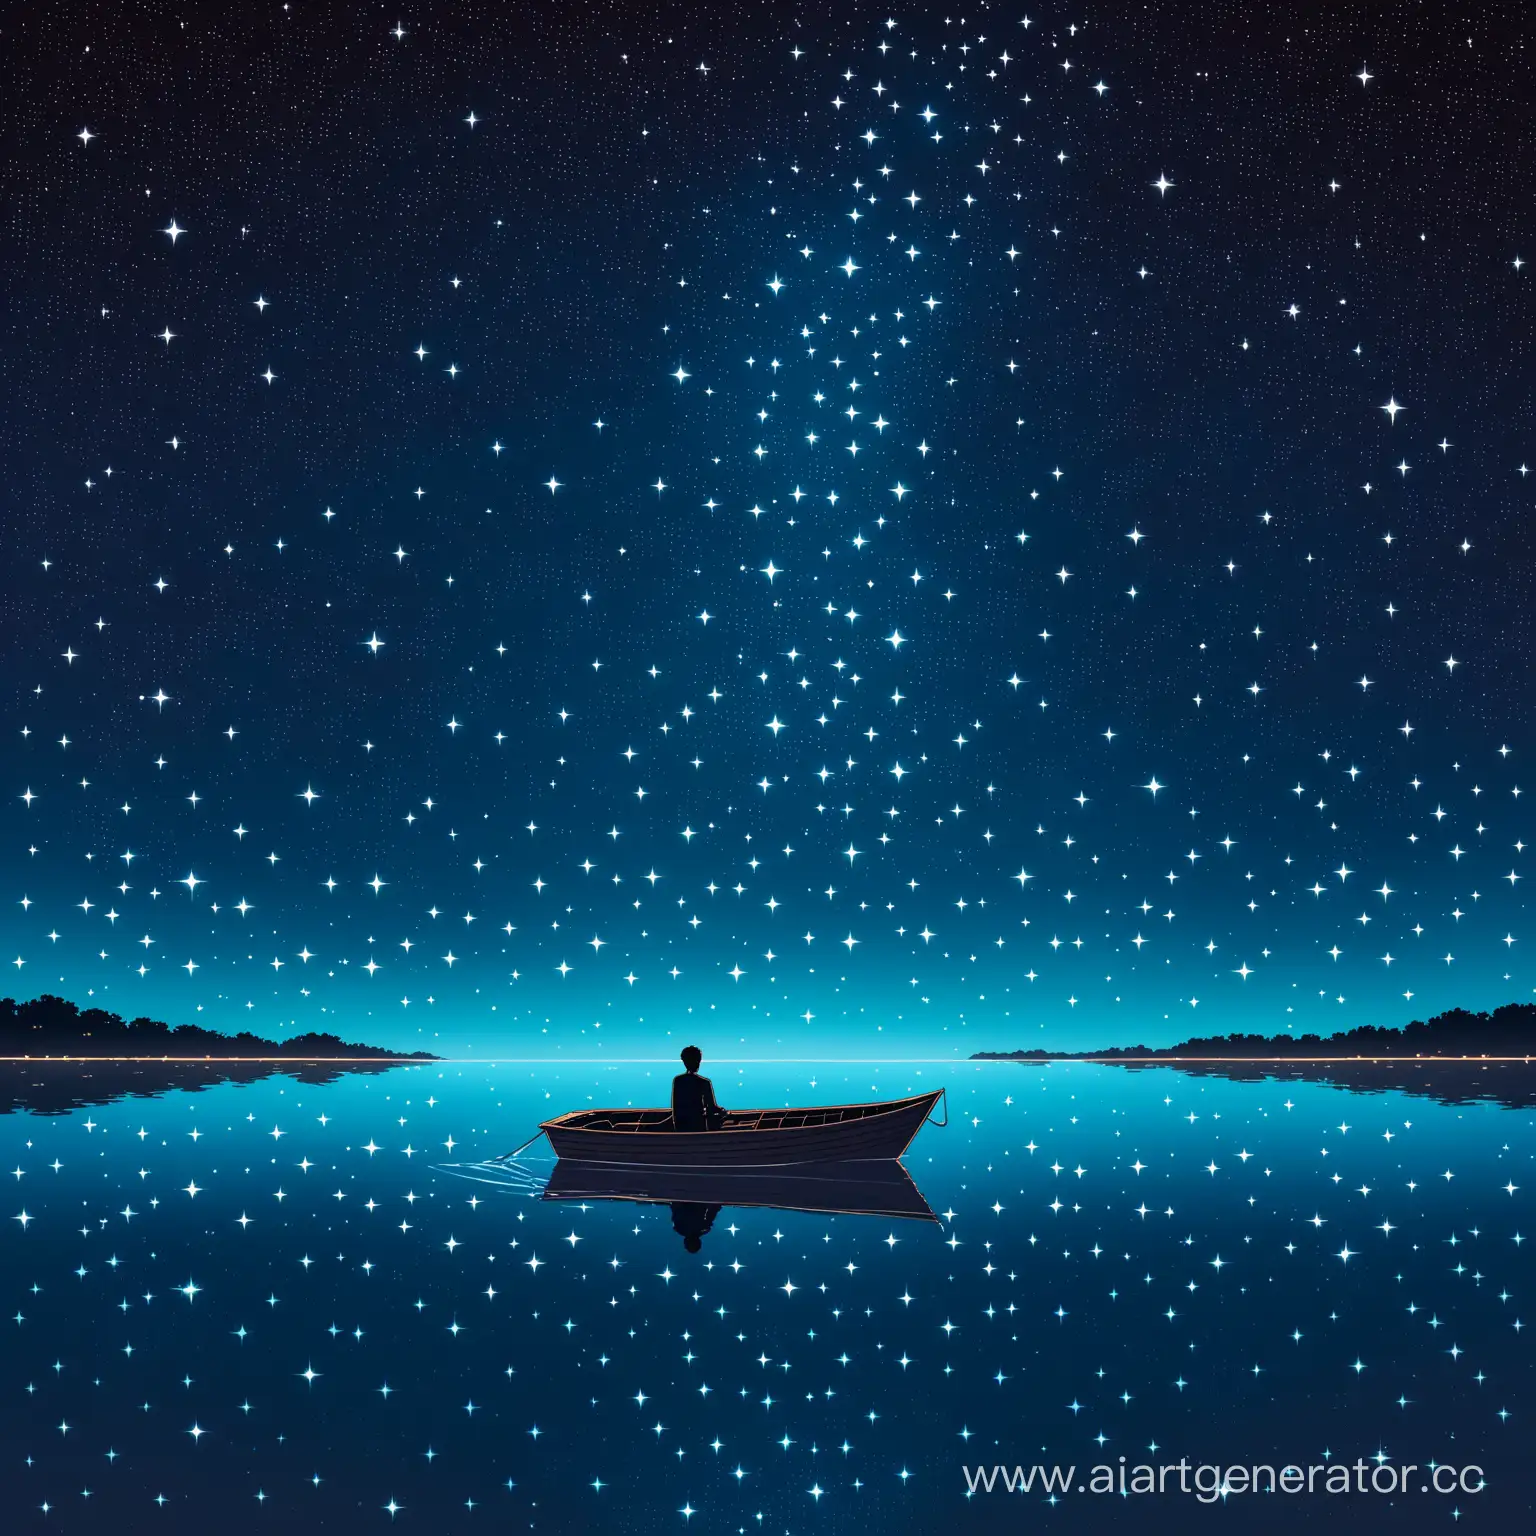 по воде плывет лодка. много звезд отражается на поверхности воды. в лодке юноша смотри на небо